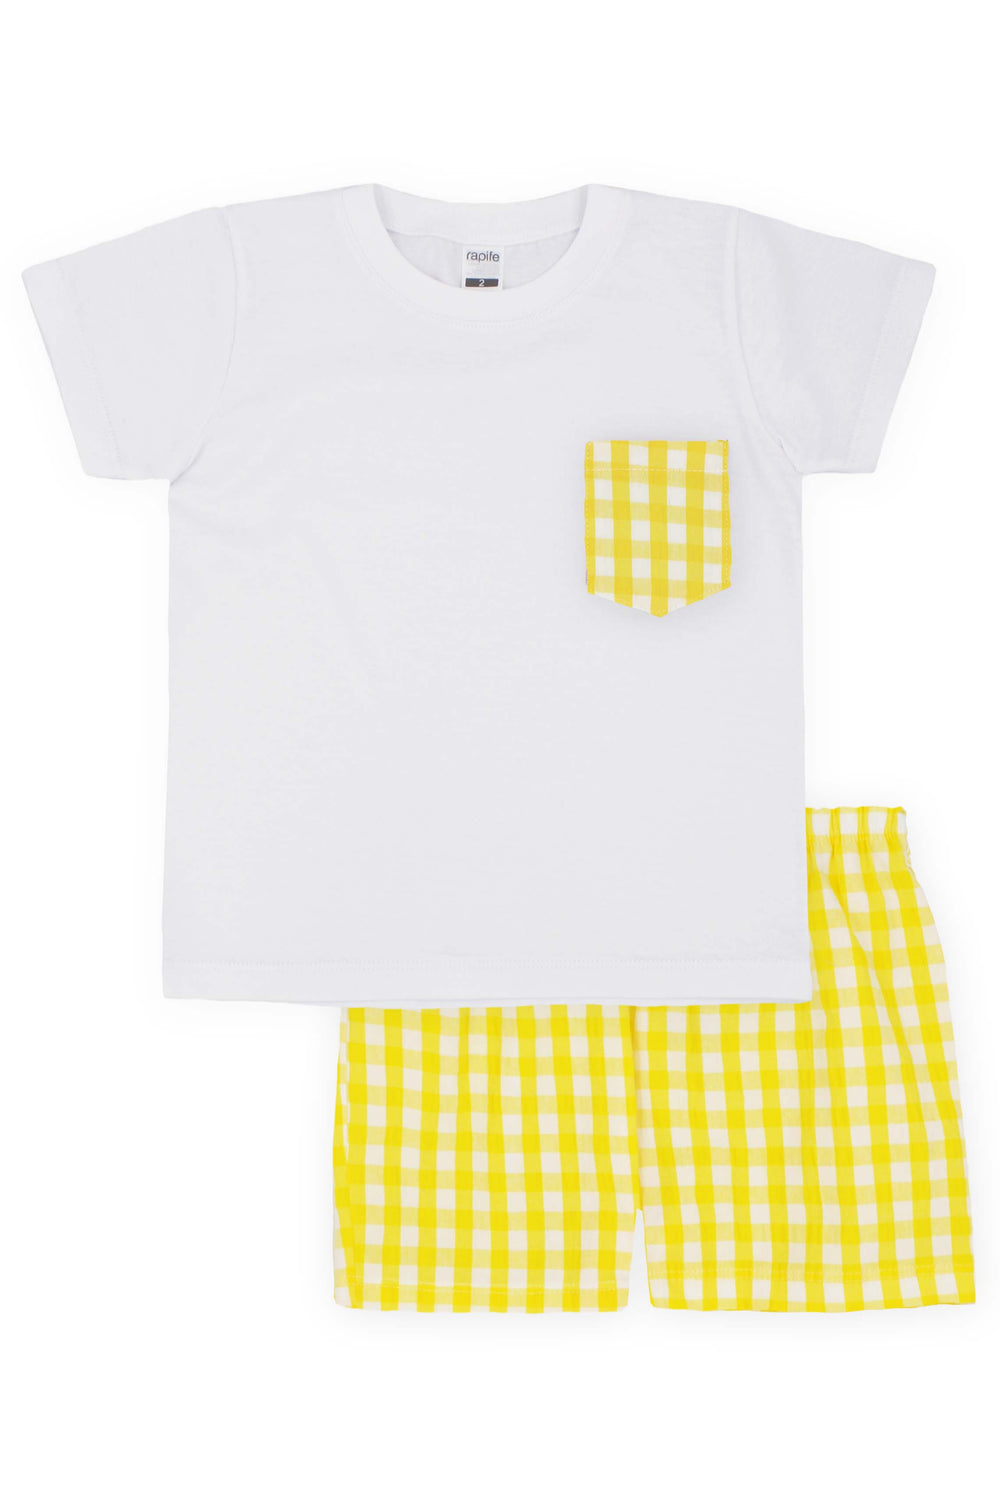 Rapife "Otis" Lemon Gingham T-Shirt & Shorts | Millie and John